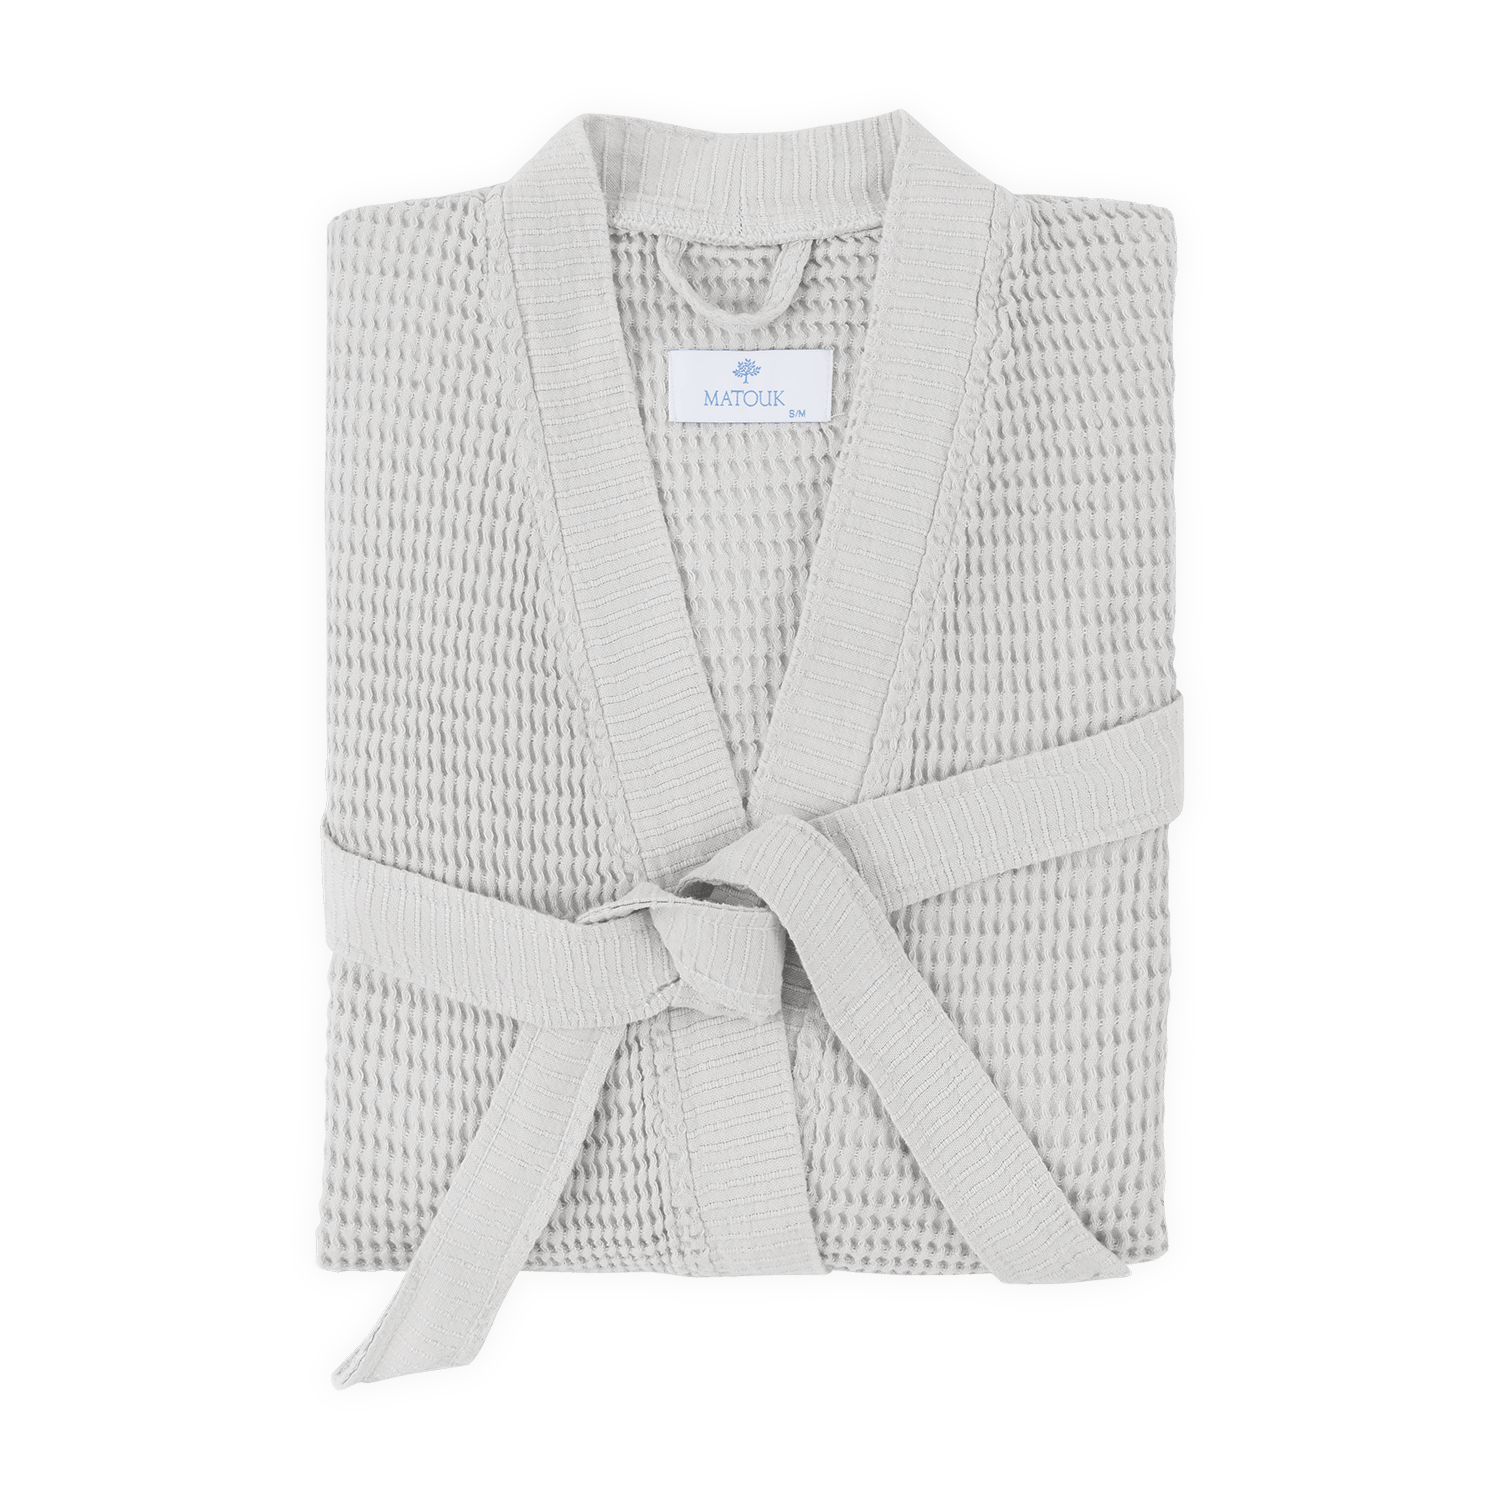 Kiran Bath Robes - Pioneer Linens